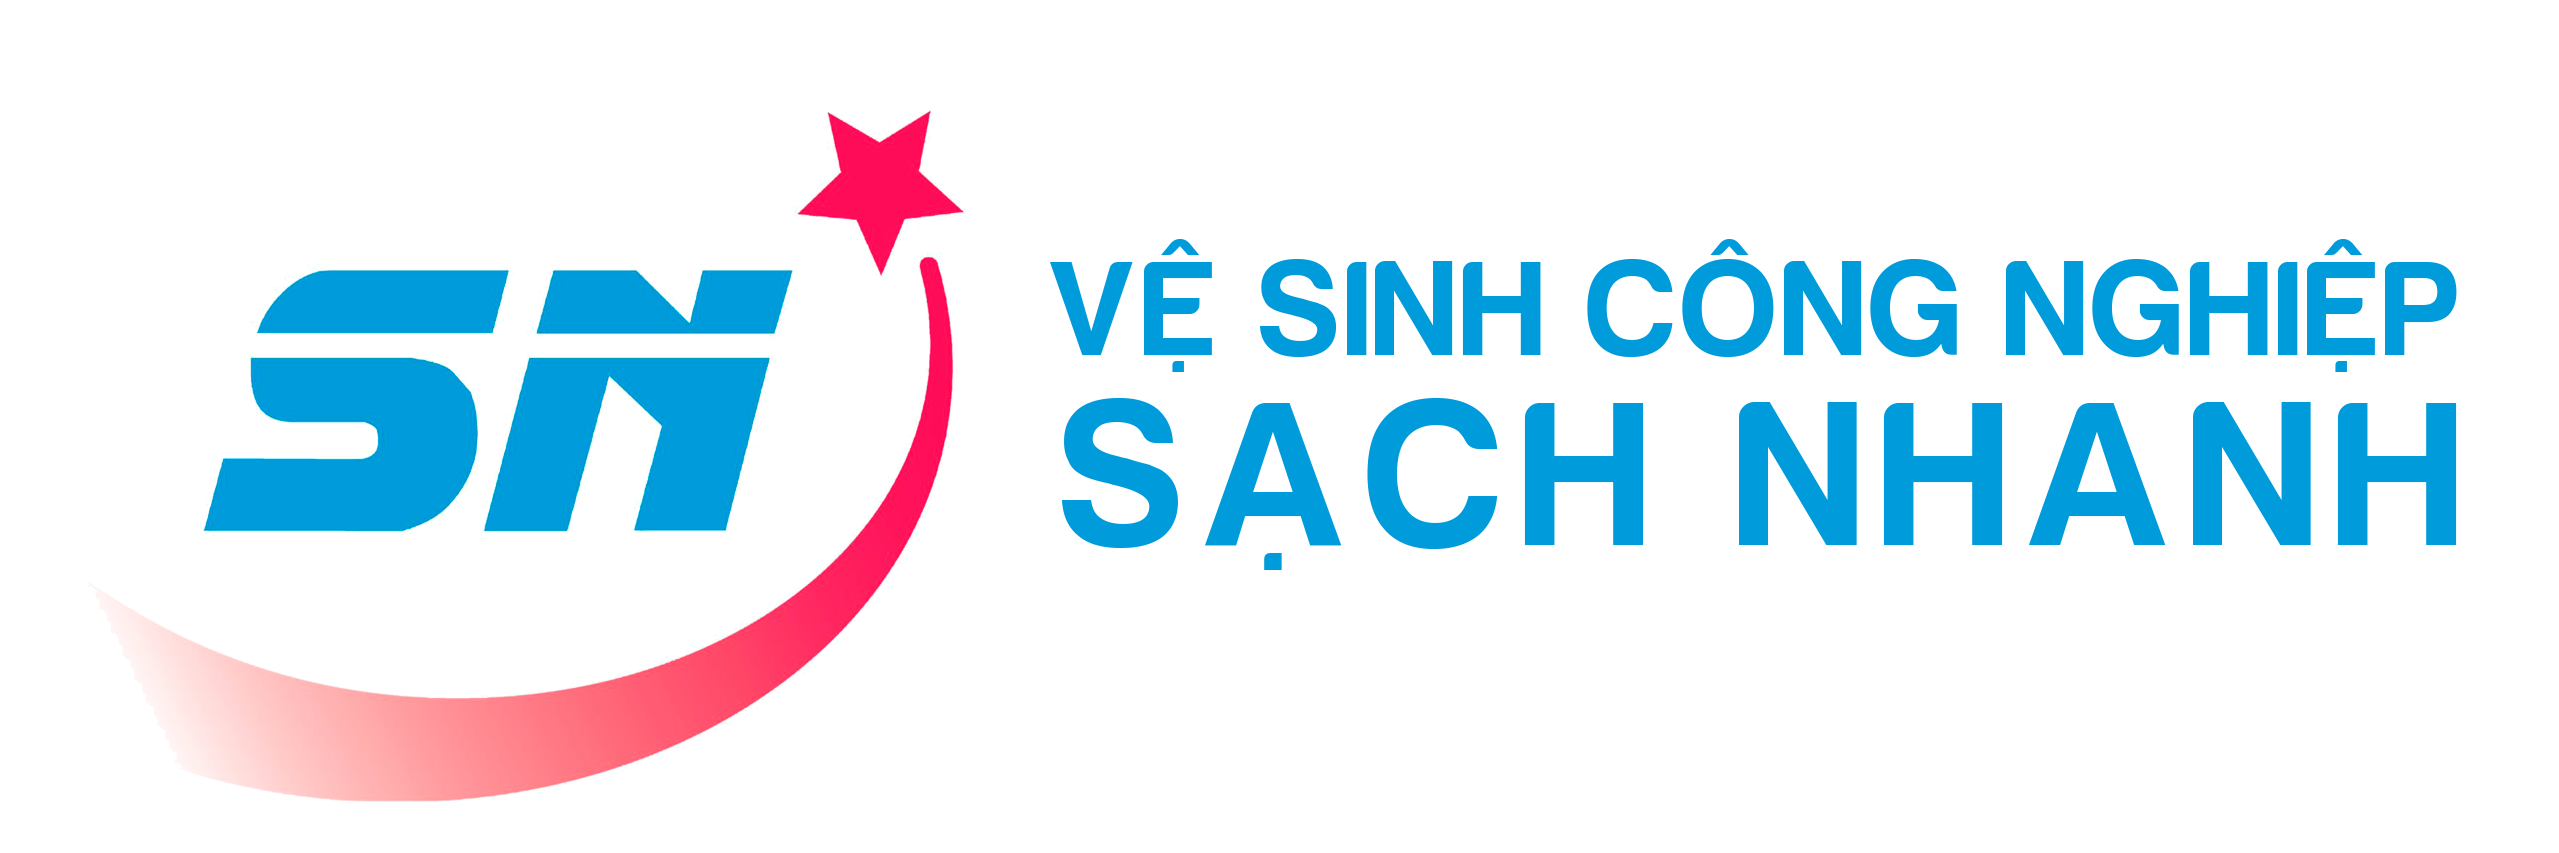 Sachnhanh